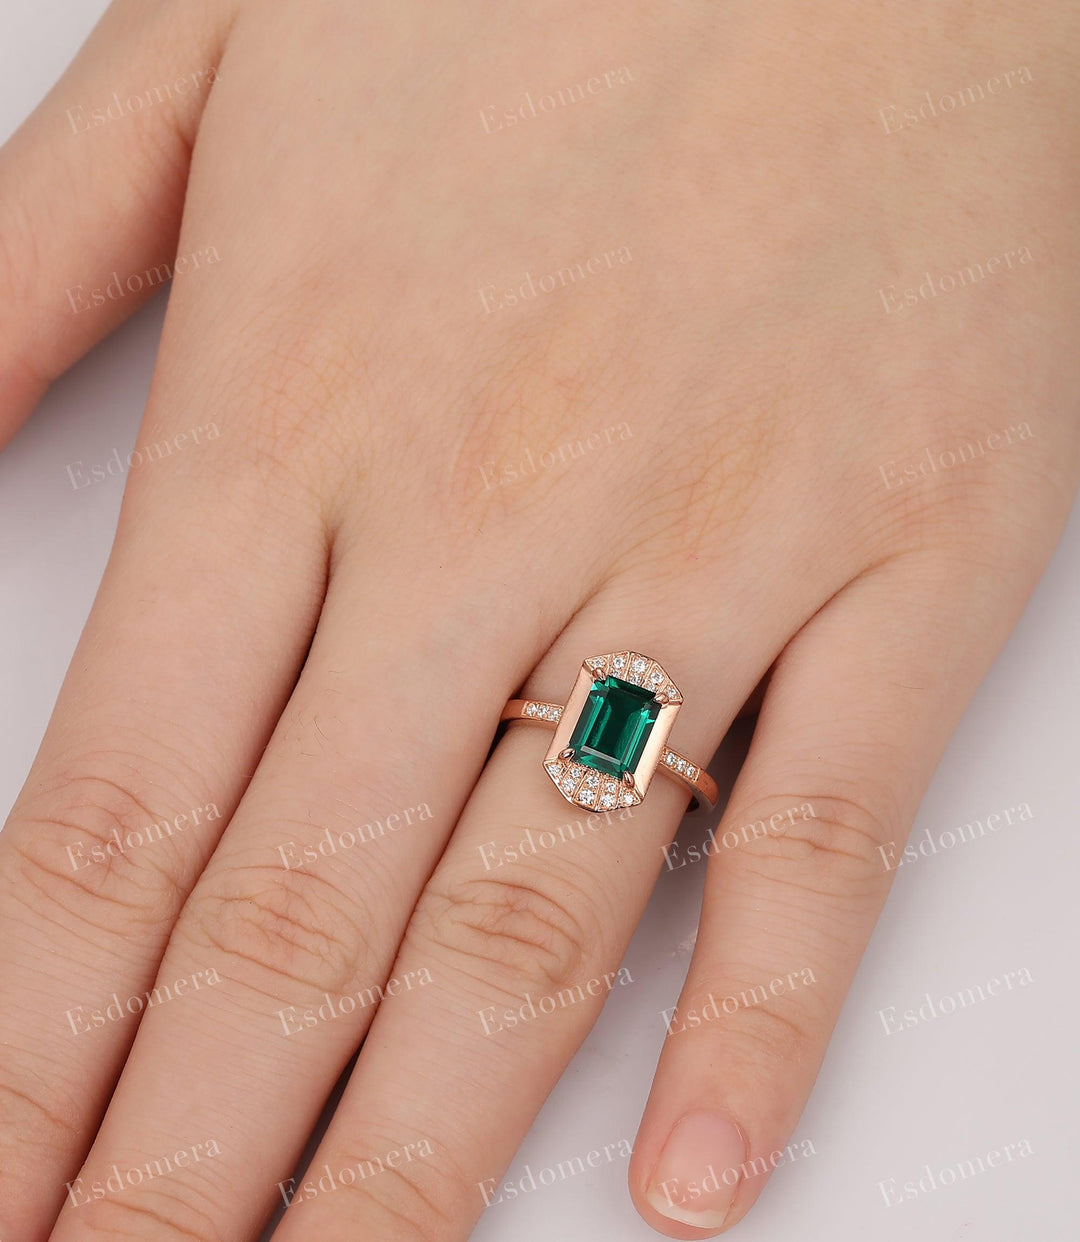 Prong Set Emerald Bridal Wedding Ring, Emerald Cut 6x8mm Emerald Anniversary Ring - Esdomera